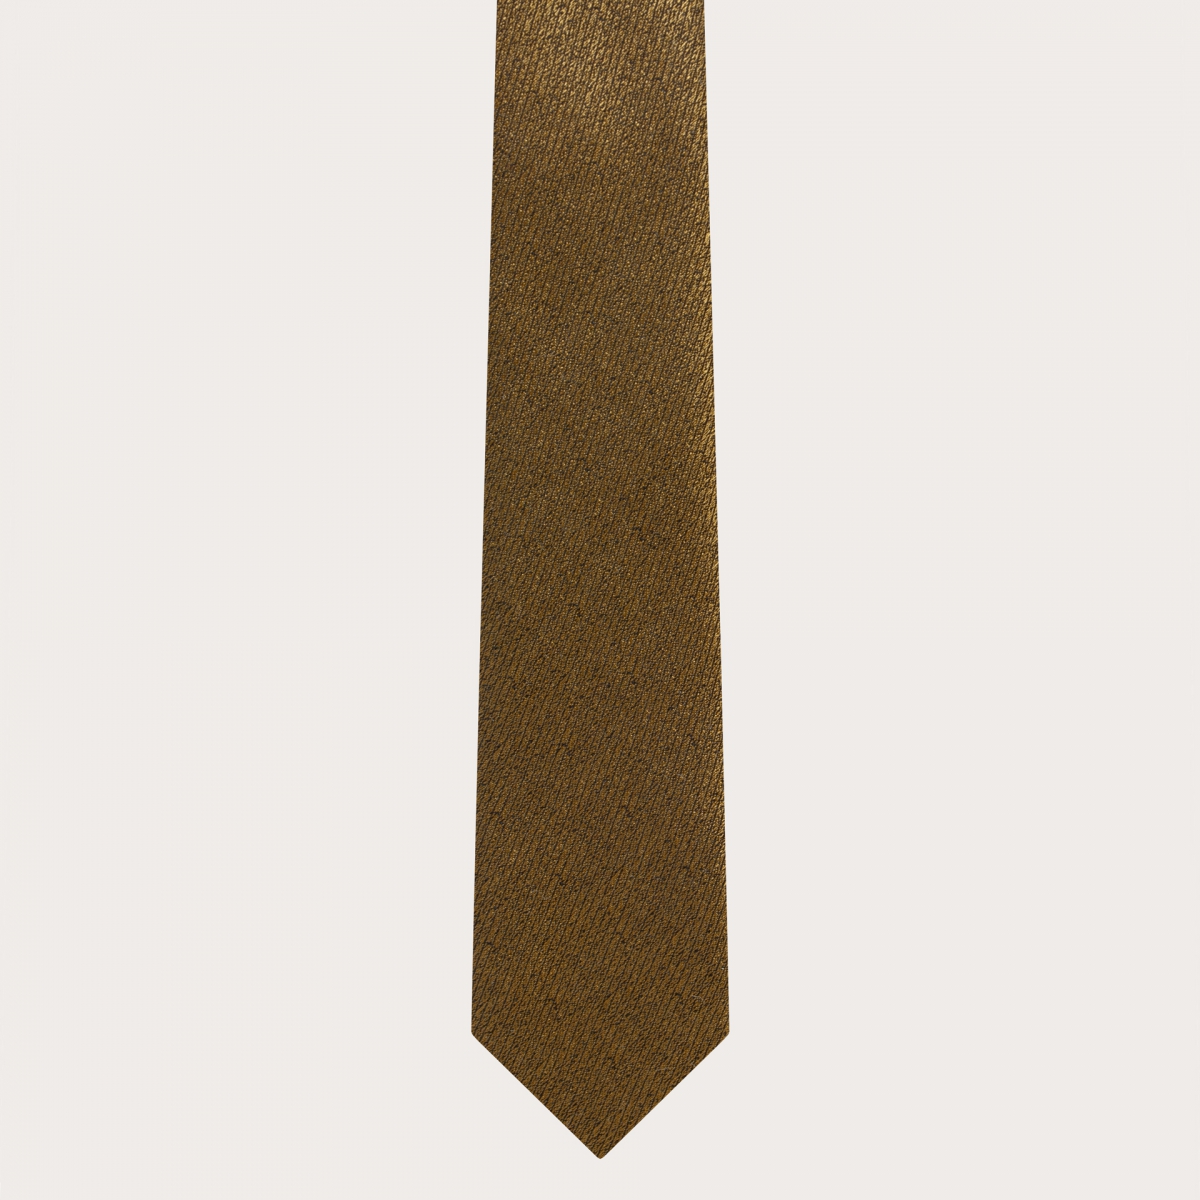 BRUCLE Complete ceremony set in iridescent golden silk, suspenders, necktie and pocket square